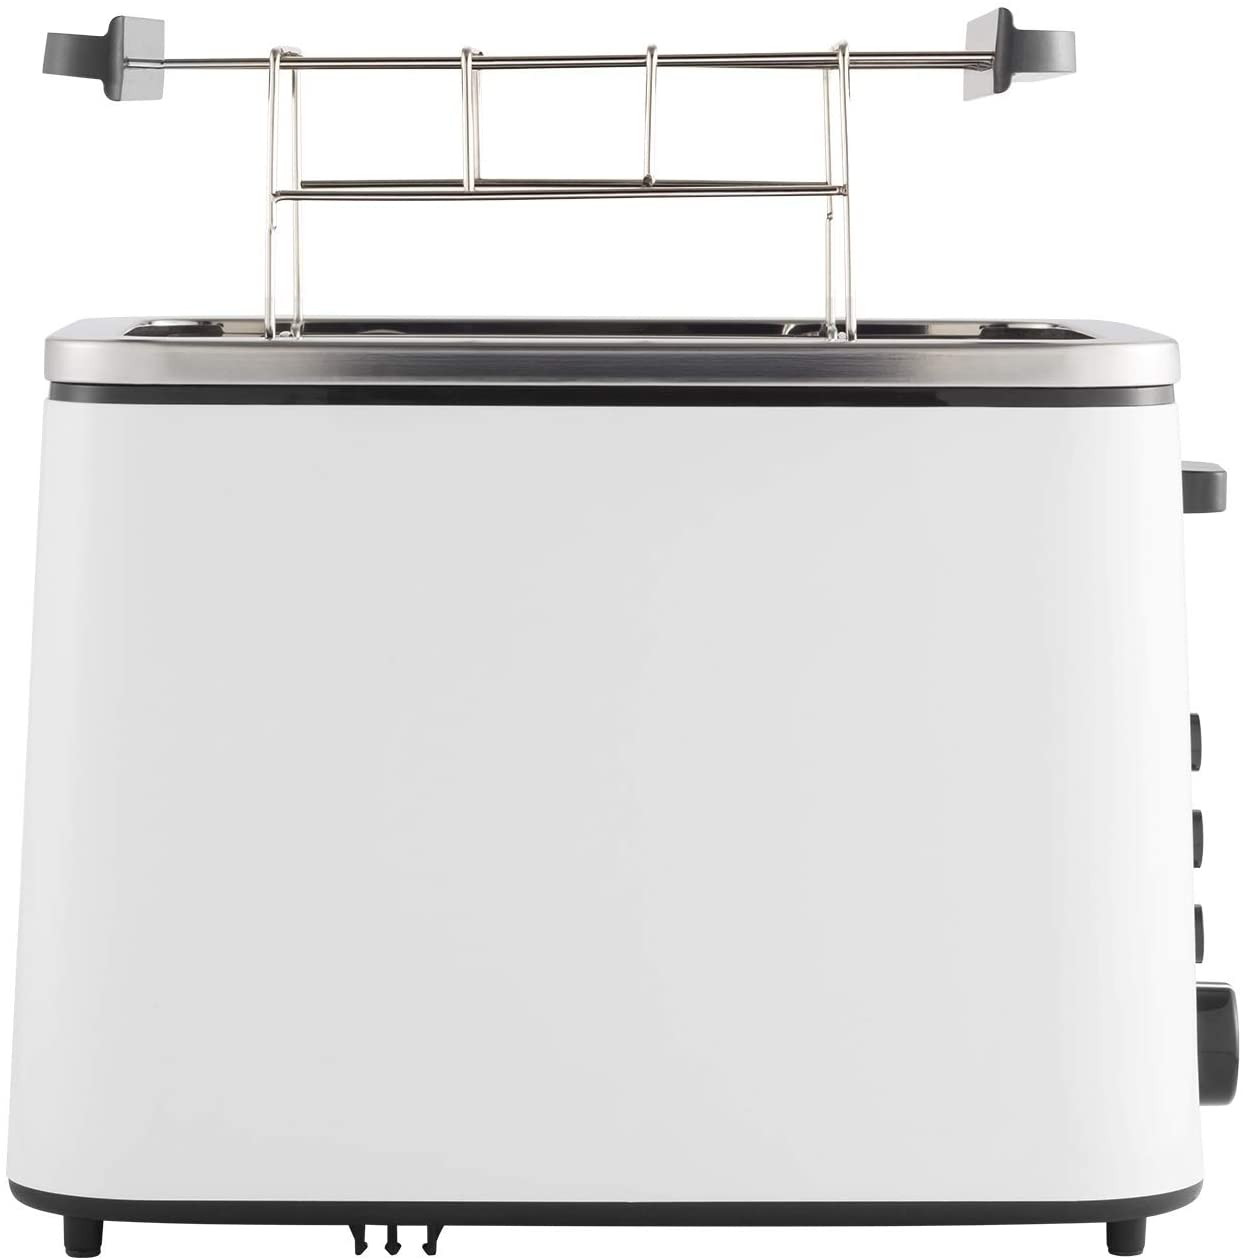 Grundig TA 5860 Toaster, 800 W, 6 Browning Levels, Memory Function, 800, White/Black